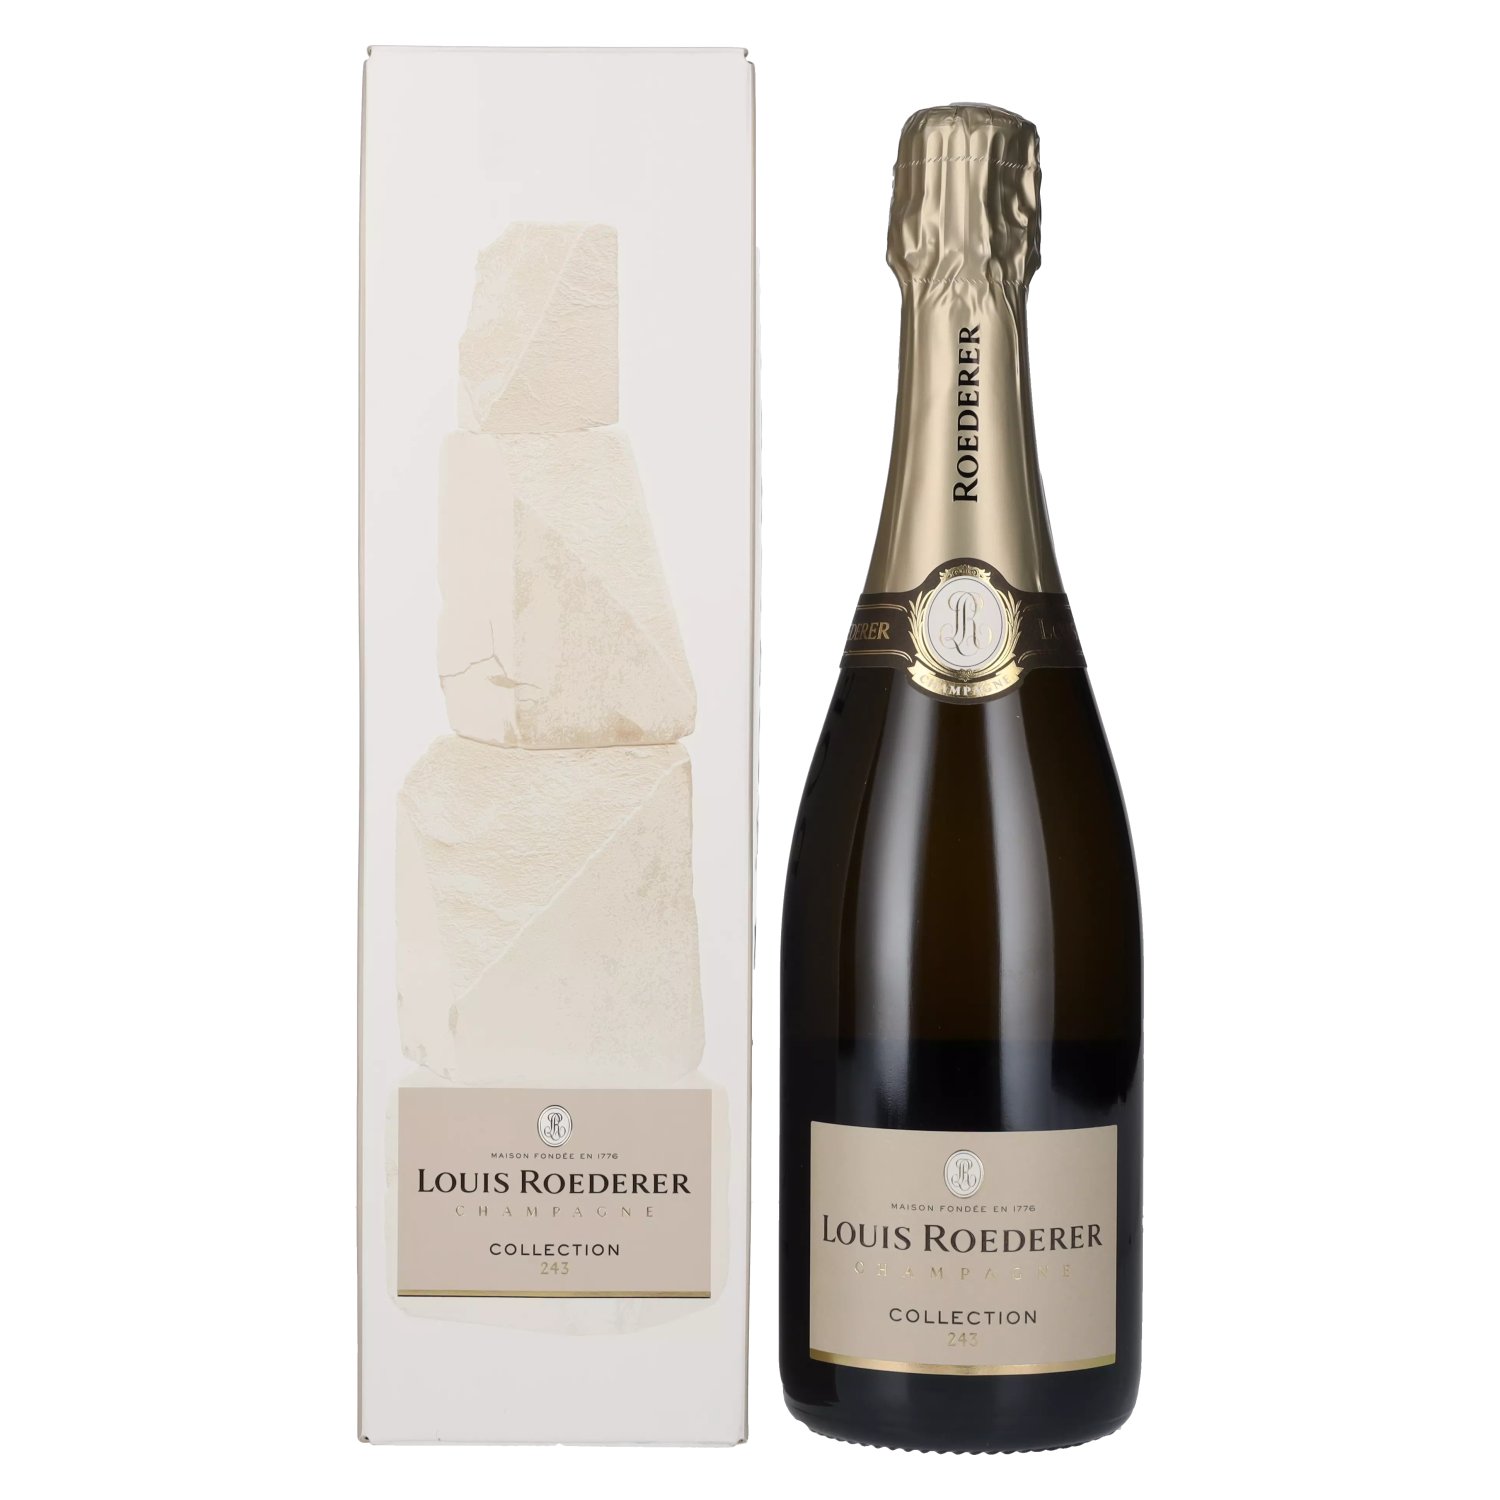 Louis Roederer Champagne Geschenkbox 0,75l 243 in Vol. 12,5% Collection